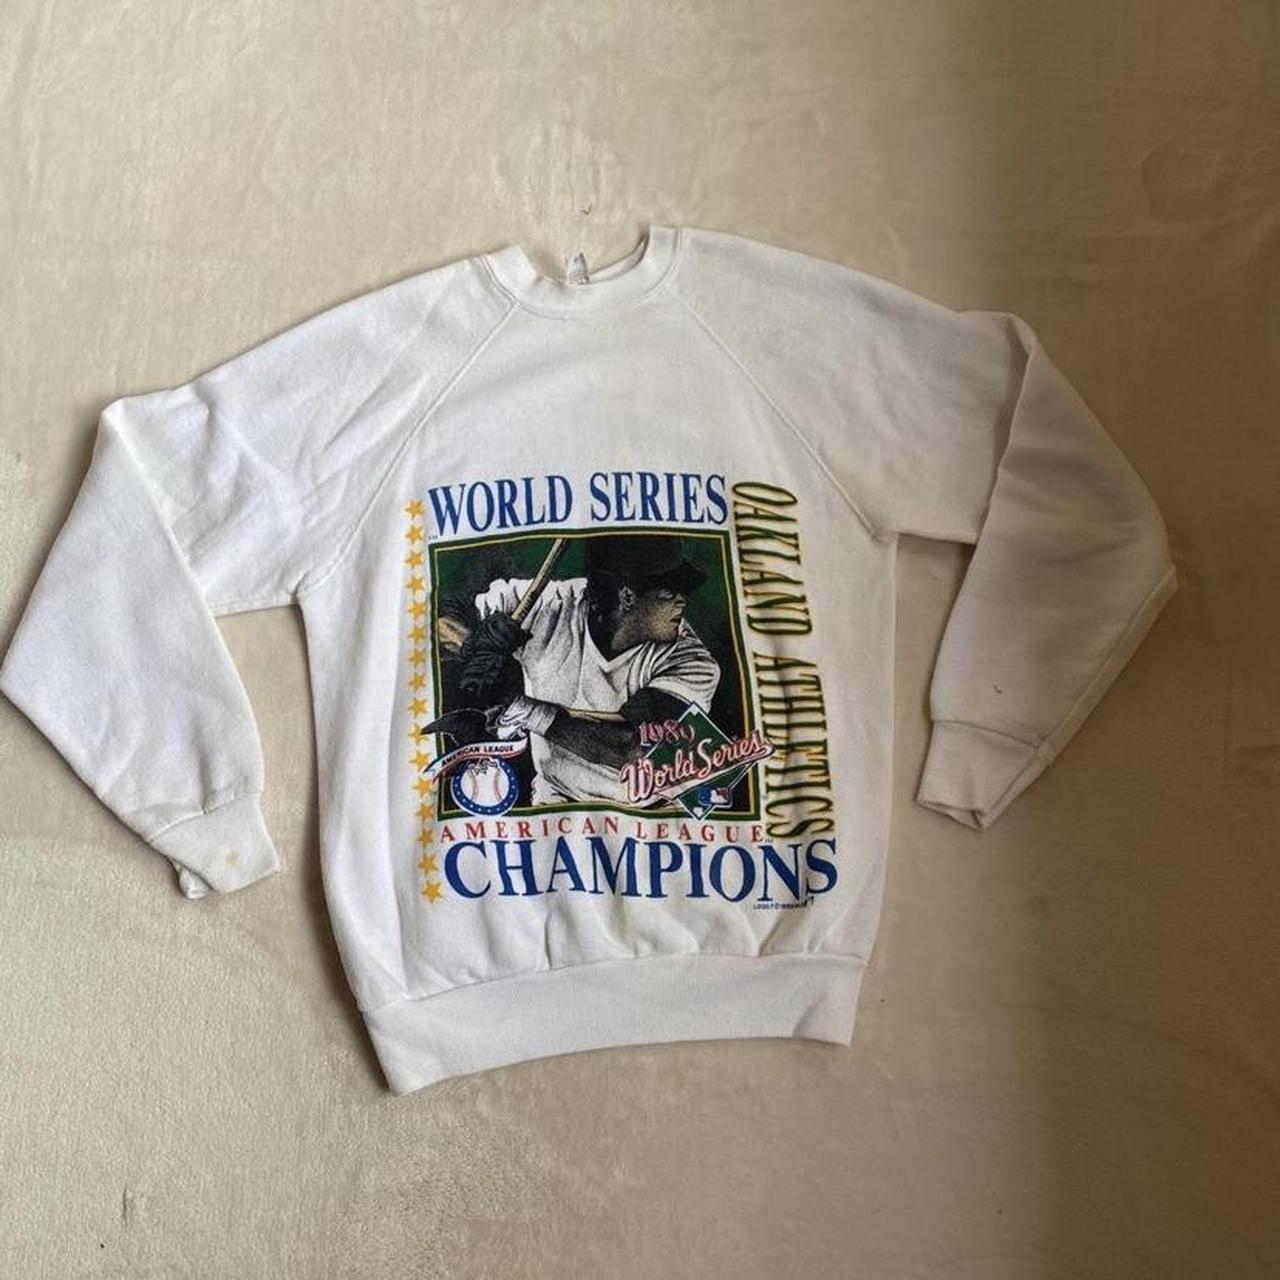 Vintage 1989 Oakland Athletics World Series Champions T-Shirt